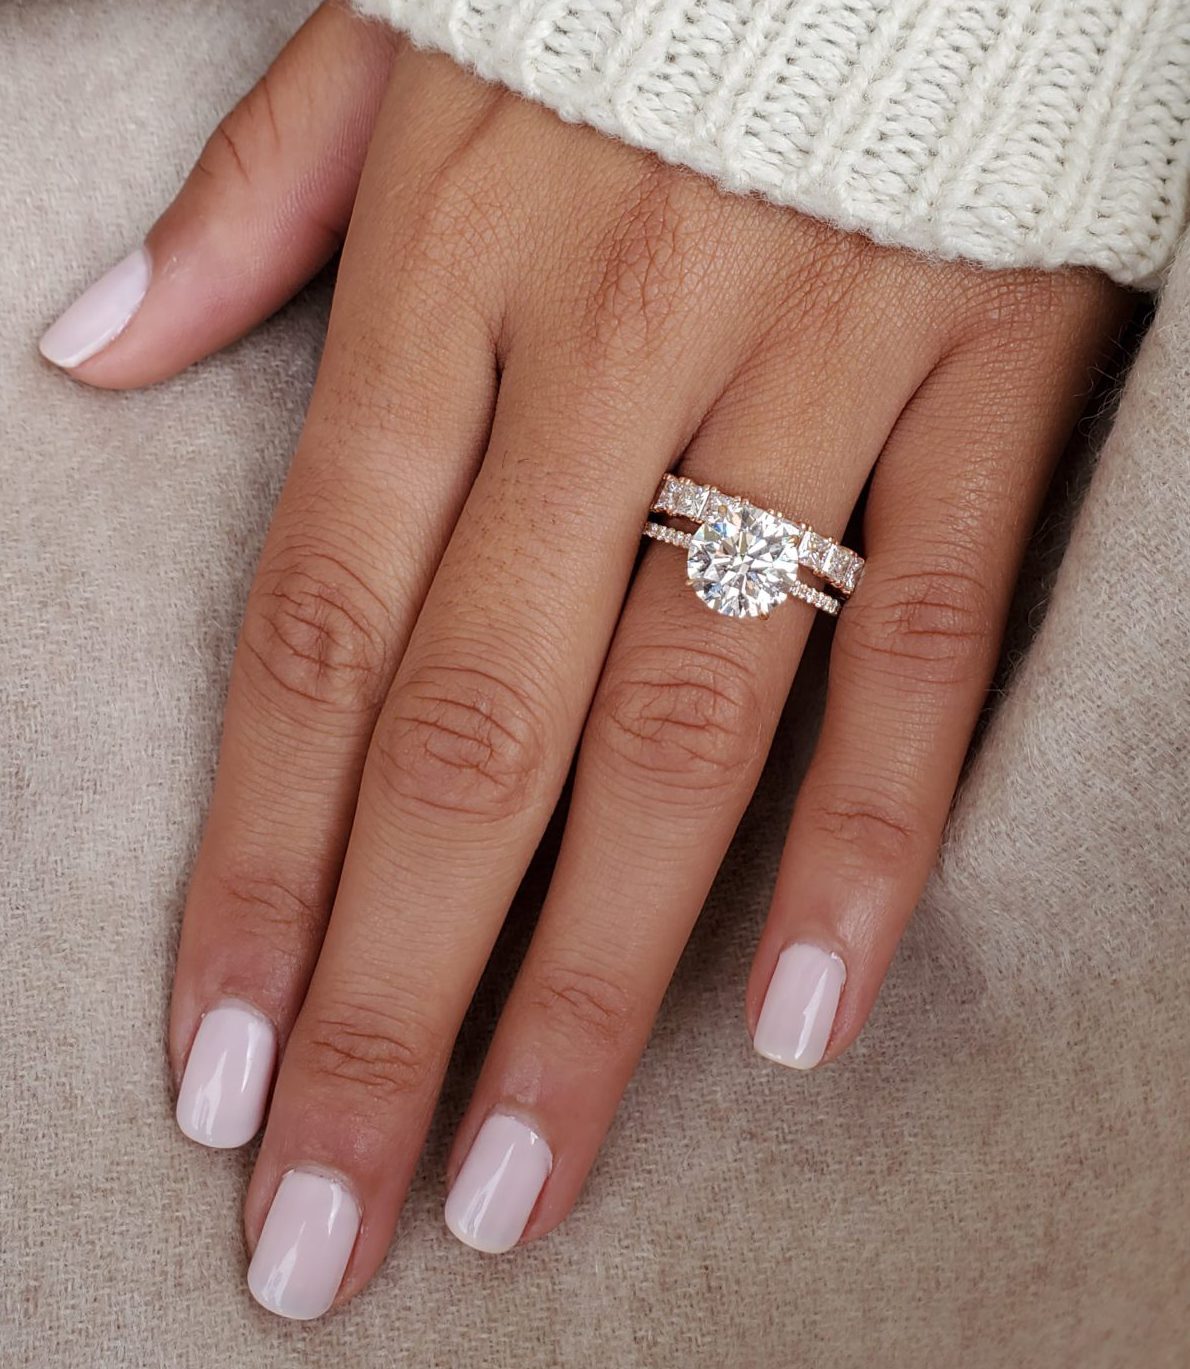 rose gold engagement rings for women